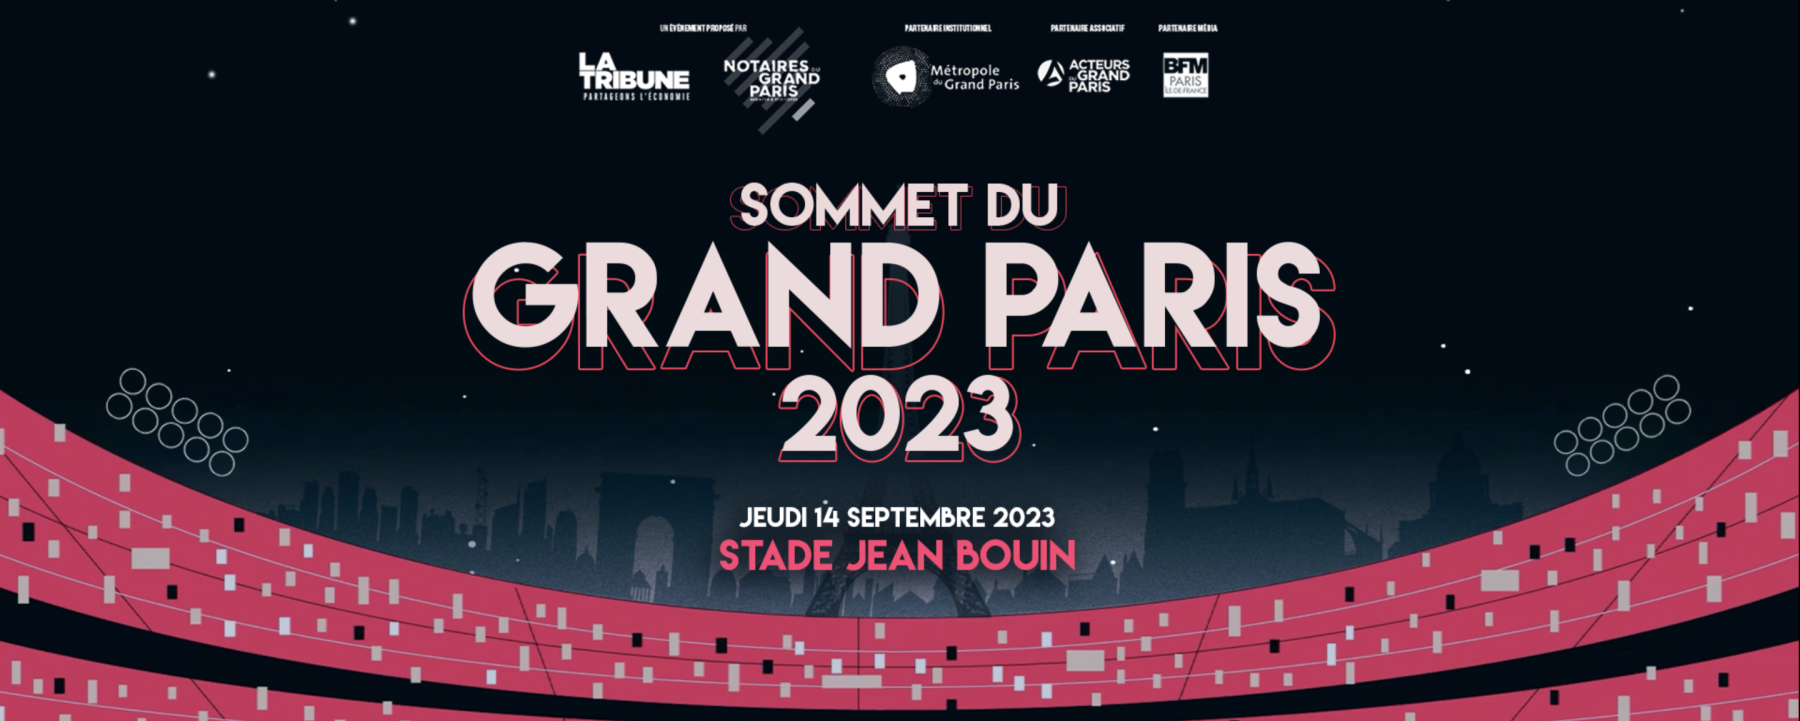 Sommet du Grand Paris 2023